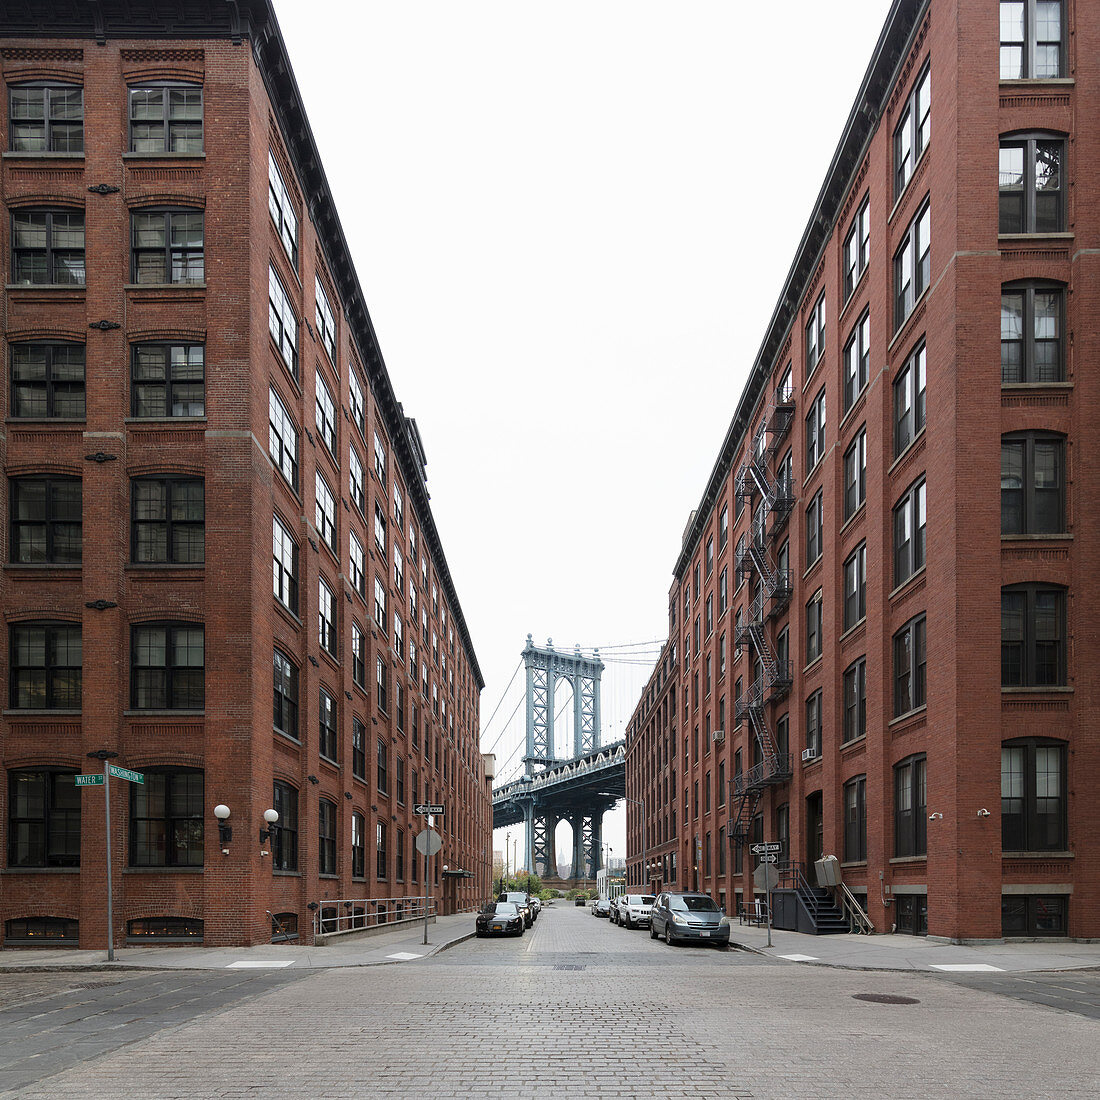 View along empty street towards Manhattan Bridge, New York City, USA during the Corona virus crisis.